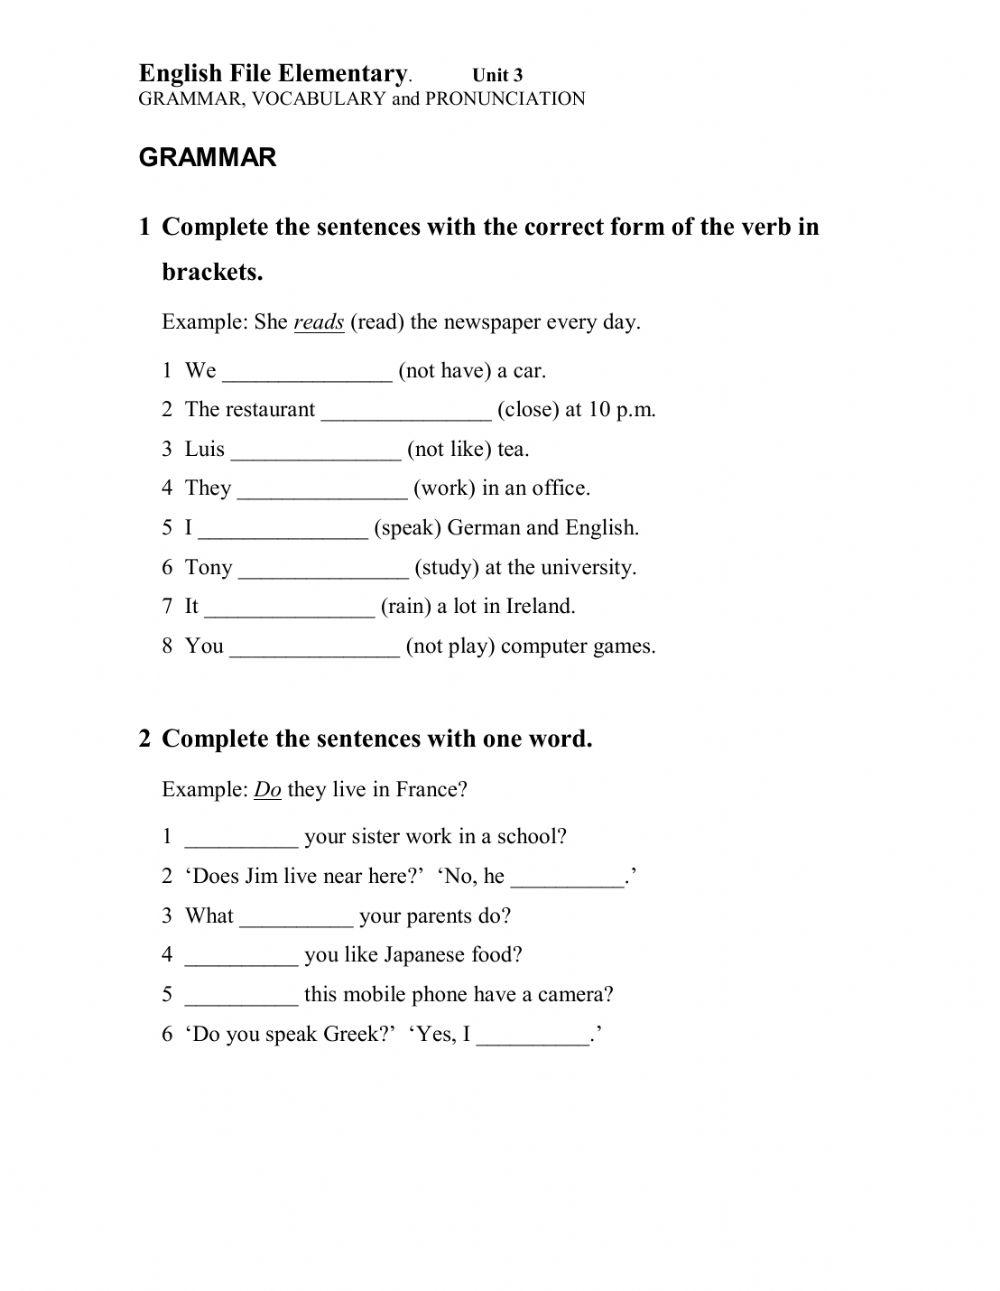 English File Elementary Unit 3 Grammar,vocabulary and pronunciation